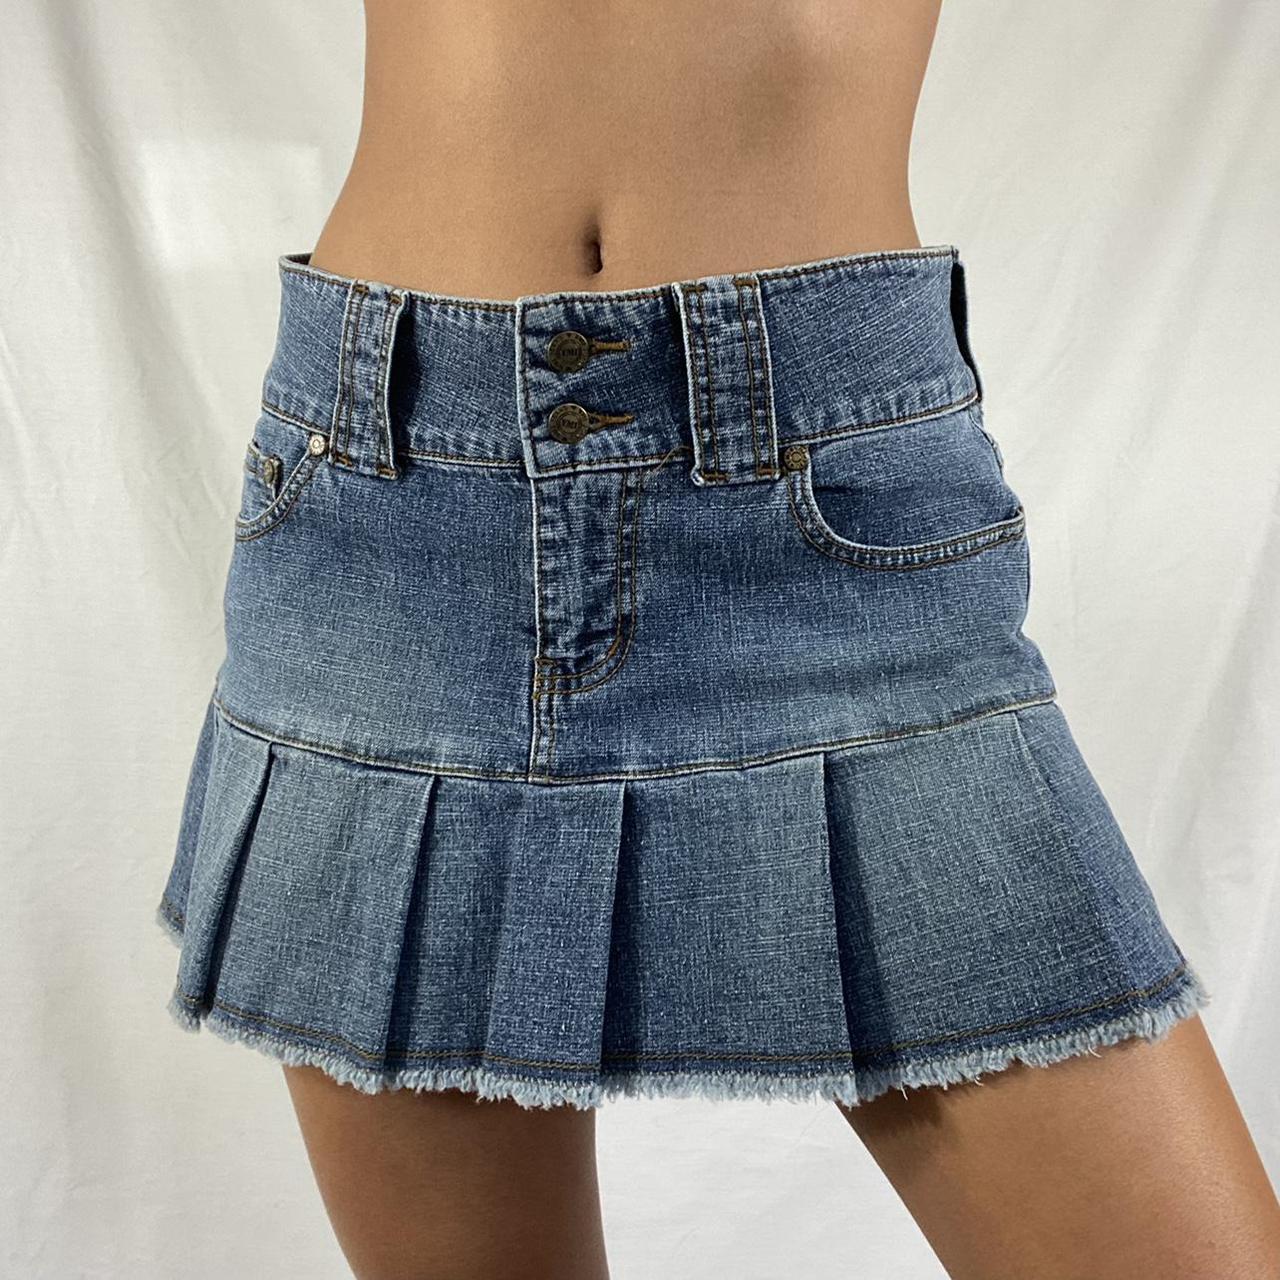 Y2K YMI low rise pleated denim mini skirt Perfect... - Depop